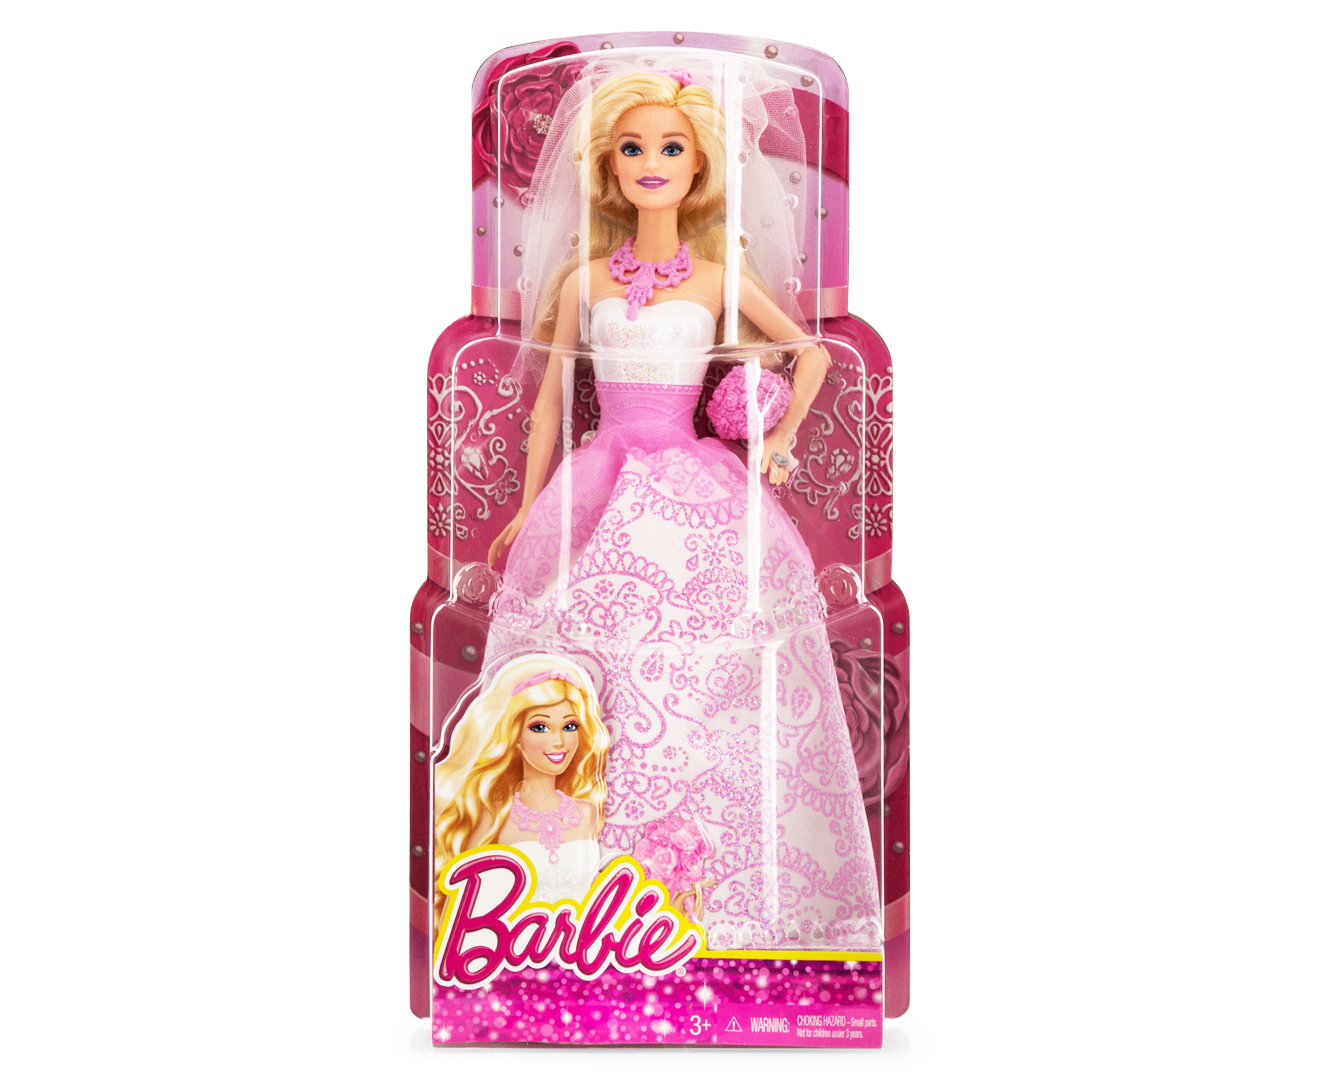 Barbie Fairytale Bride Doll - Pink